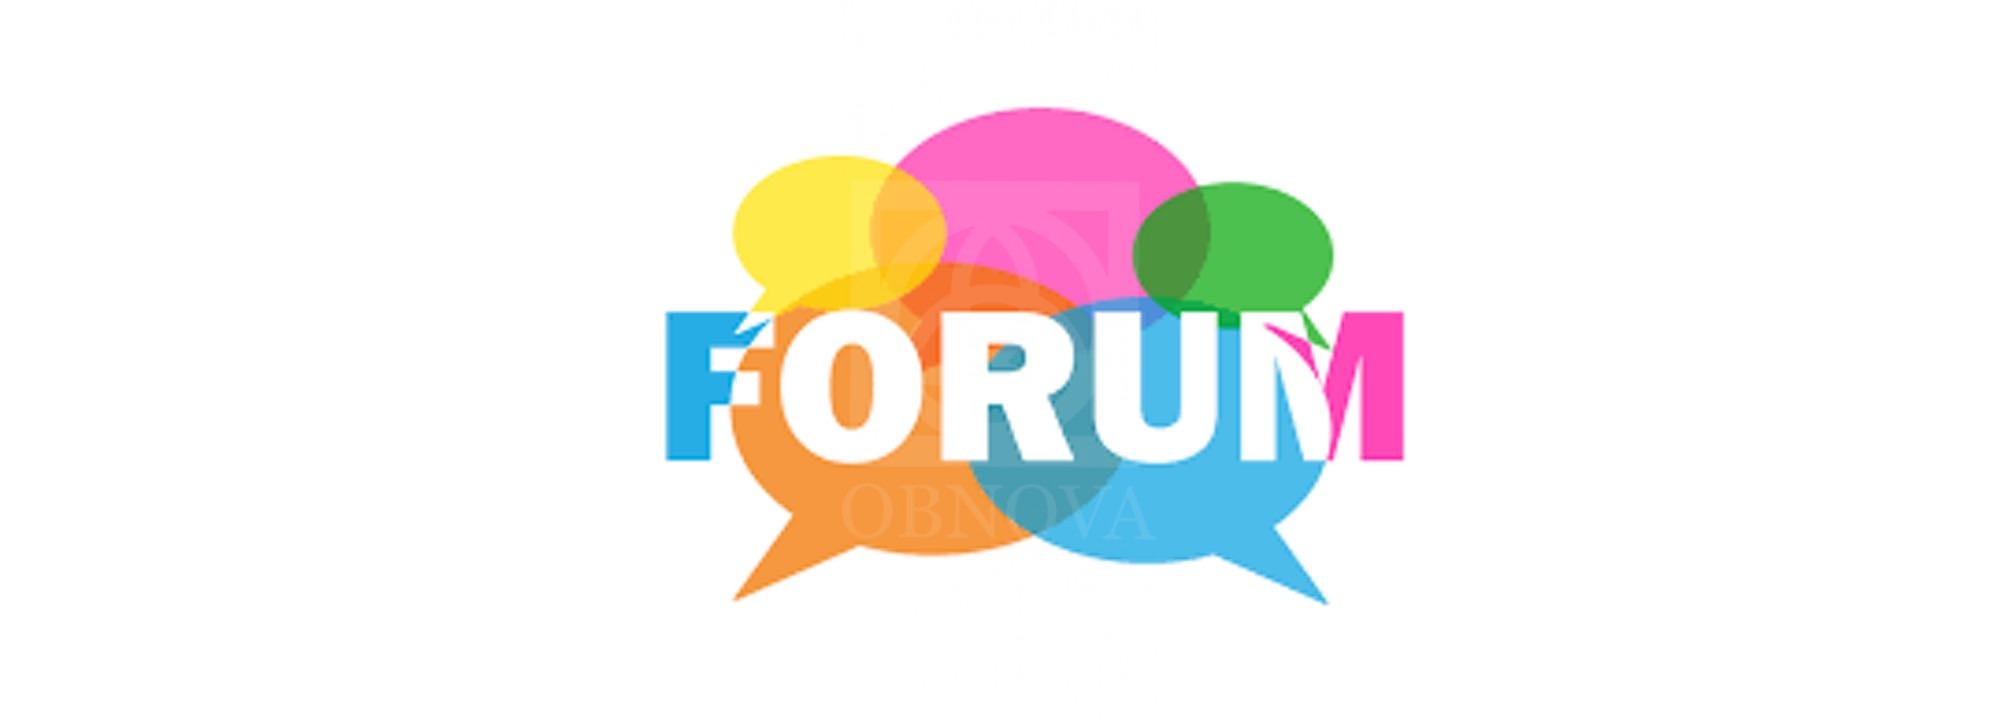 Fora o. Веб форум. Forum dgiggtal лого. Jabit forum. Forum LOQ.